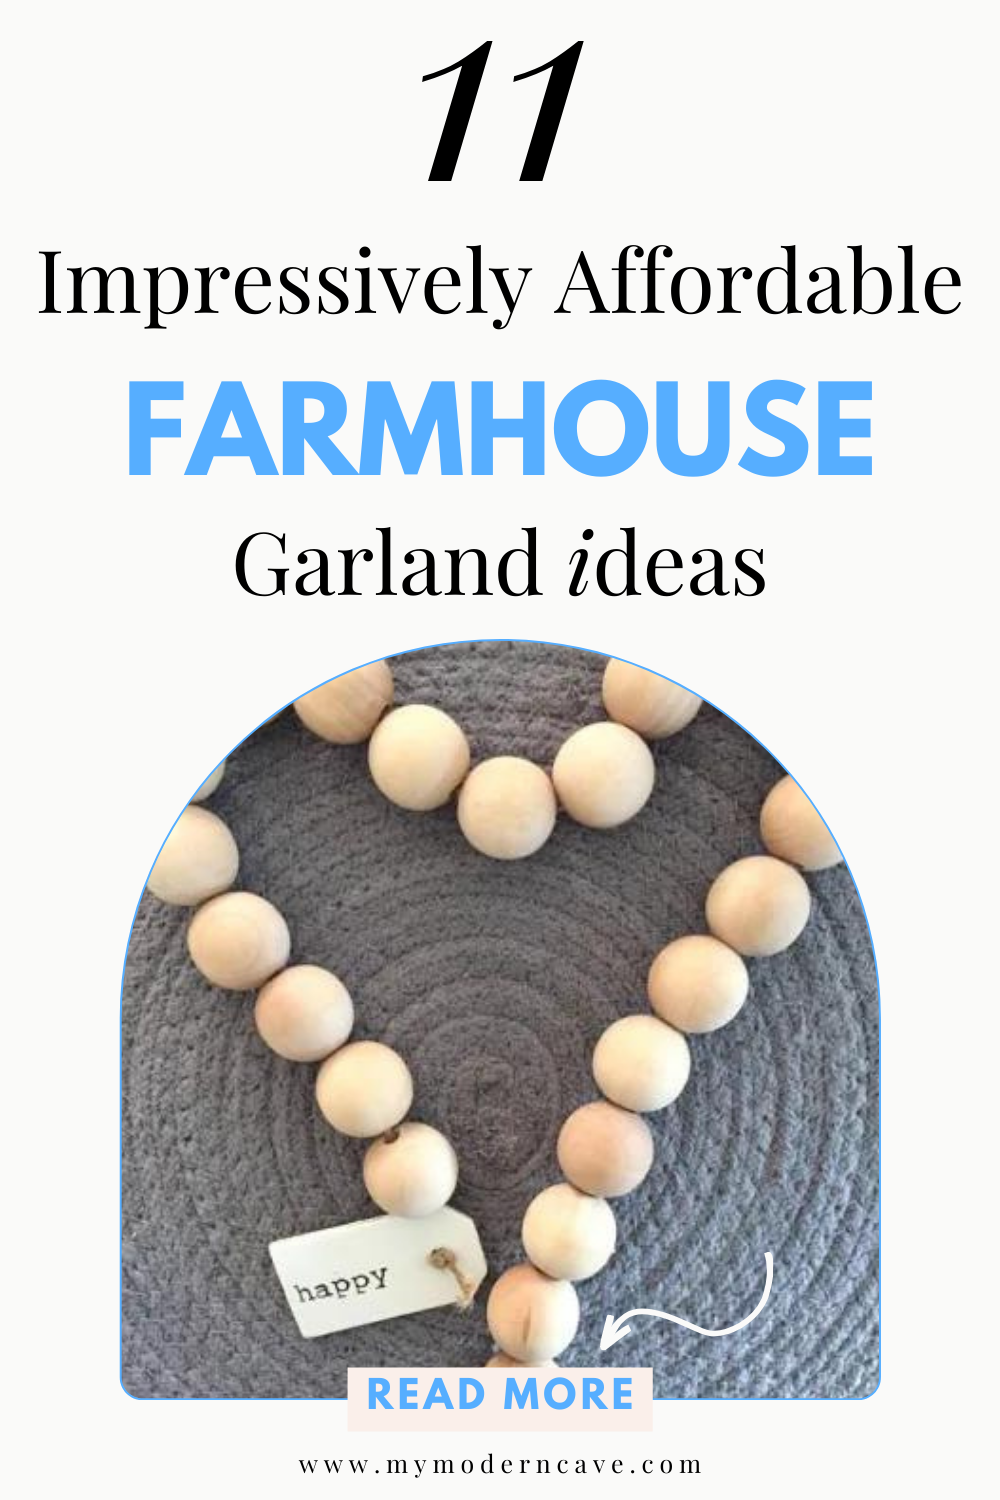 infographic on farmhouse garland ideas